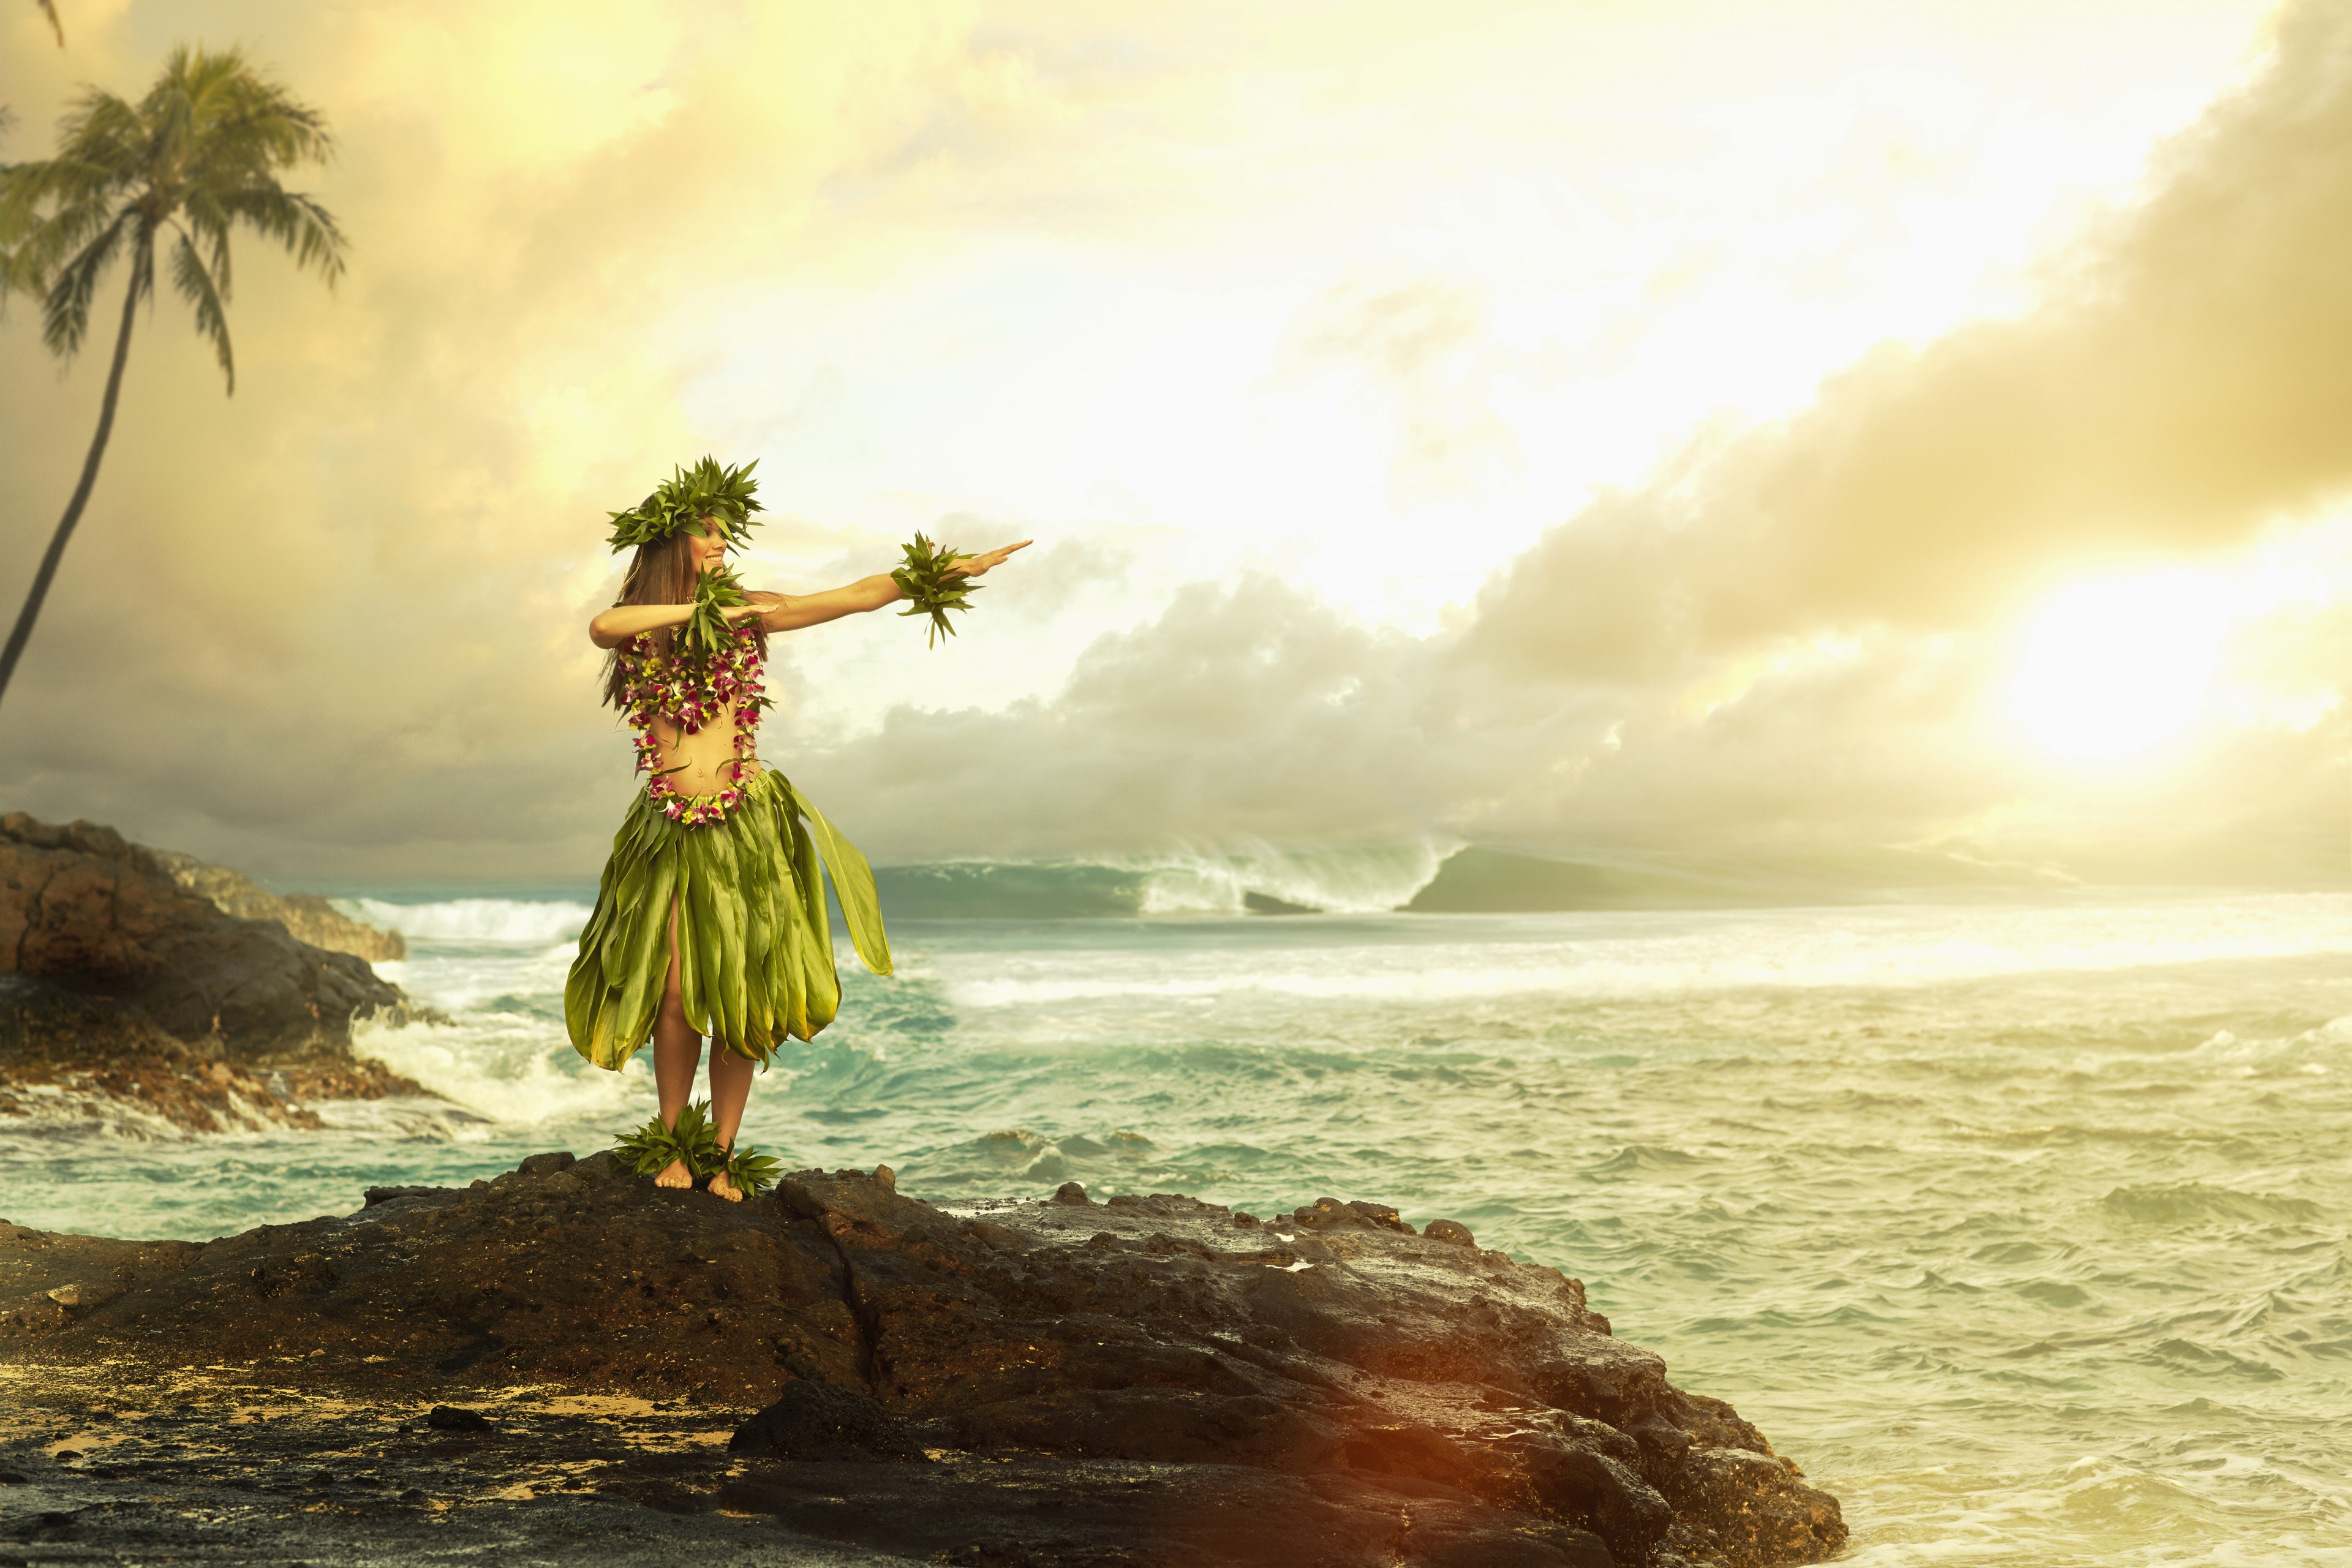 Aloha is a way of life.